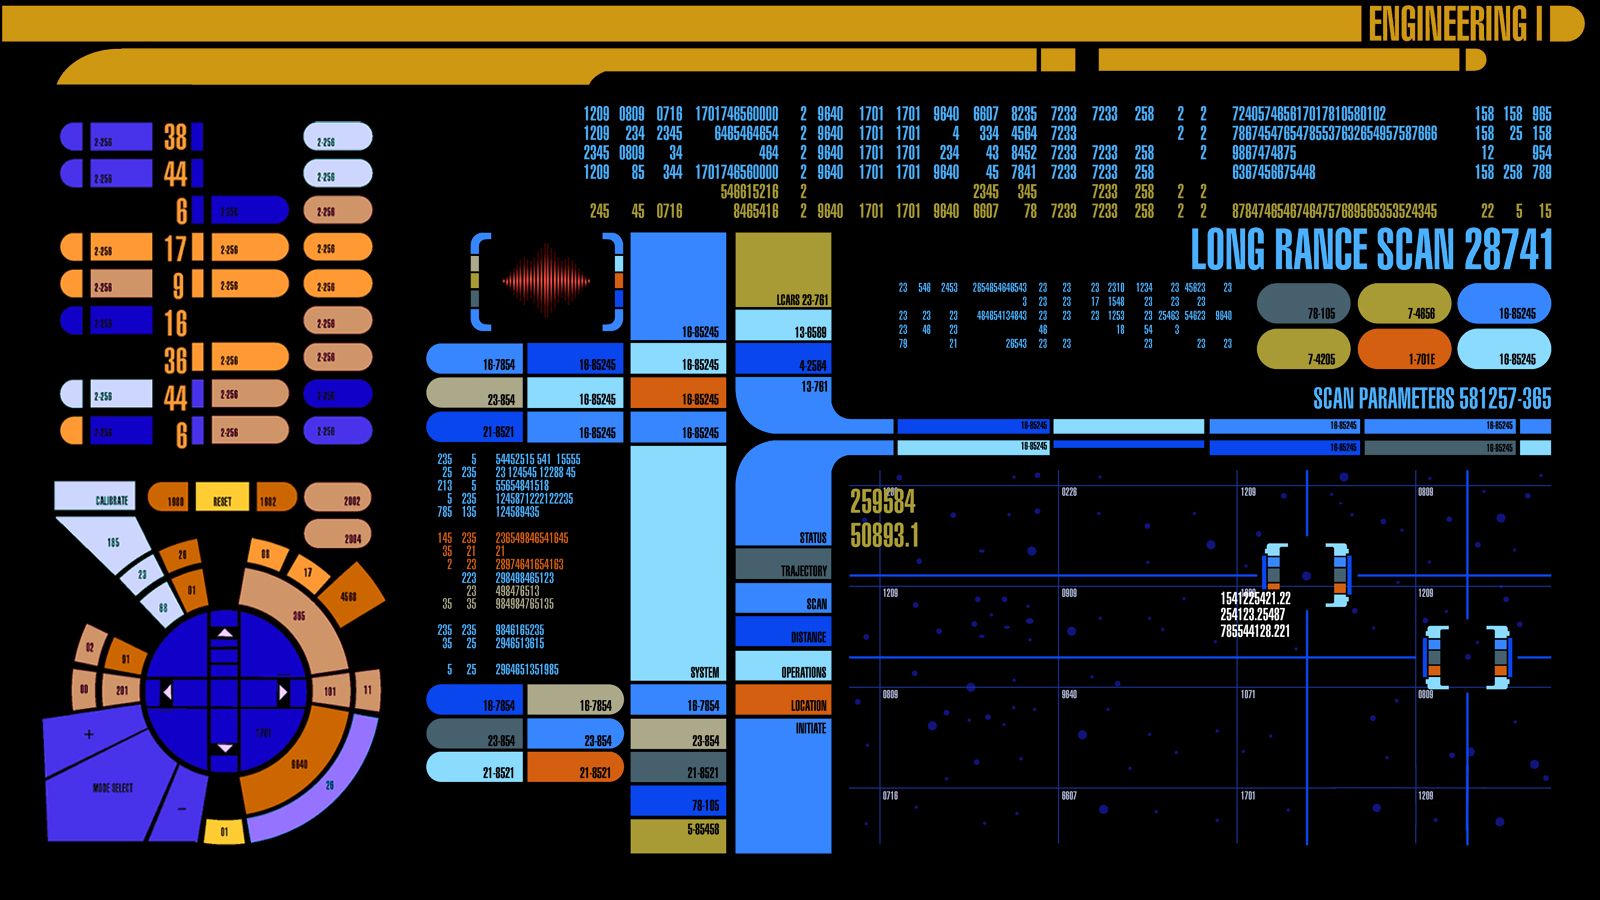 Star Trek Engineering Console HD Wallpaper 1920x1080 ID49348